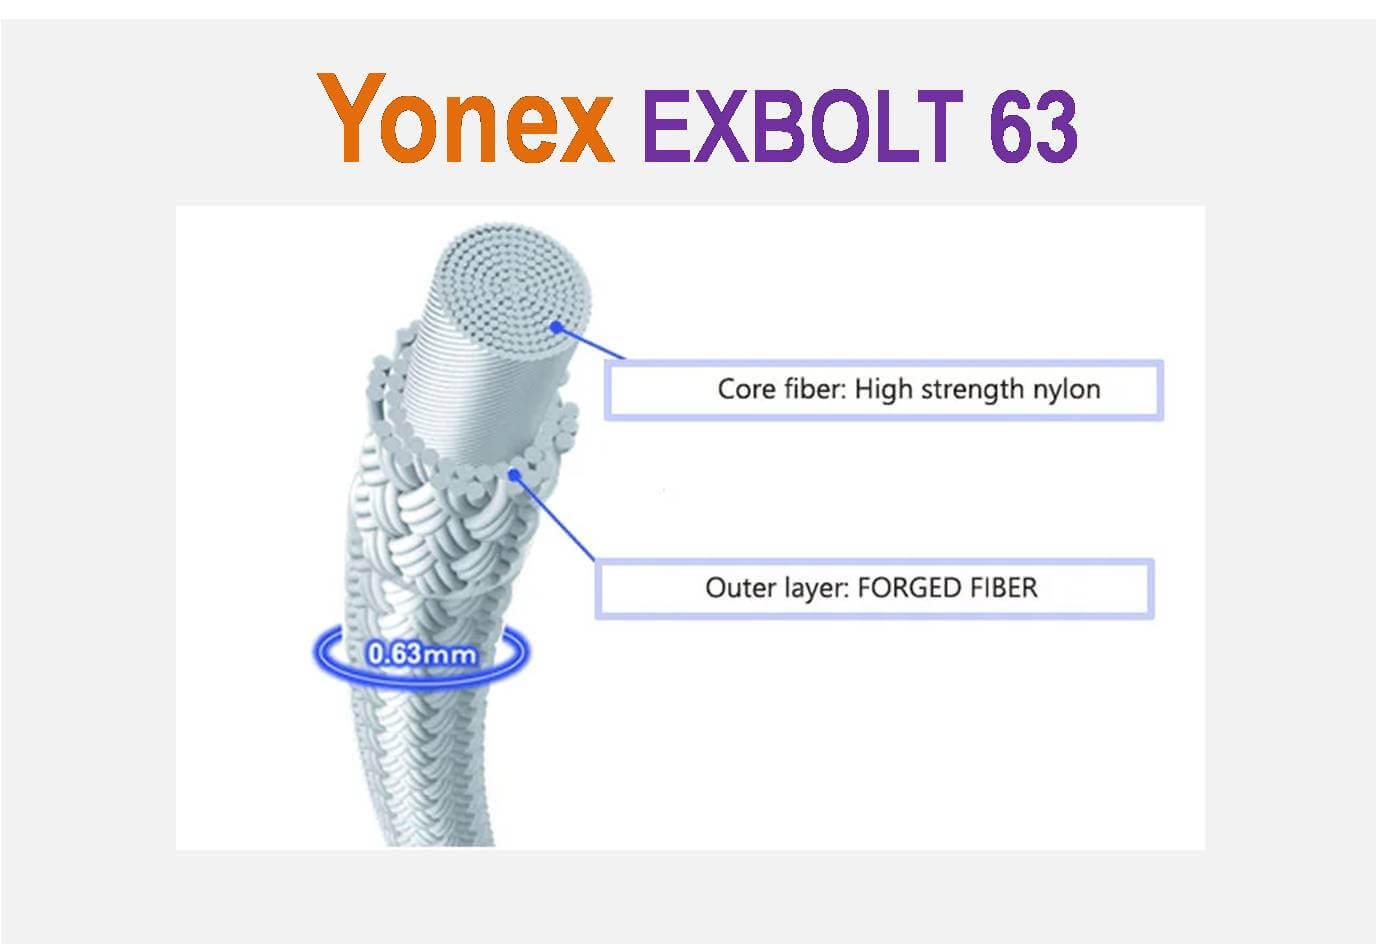 Yonex_EXBOLT_63_details_Khelmart.jpg